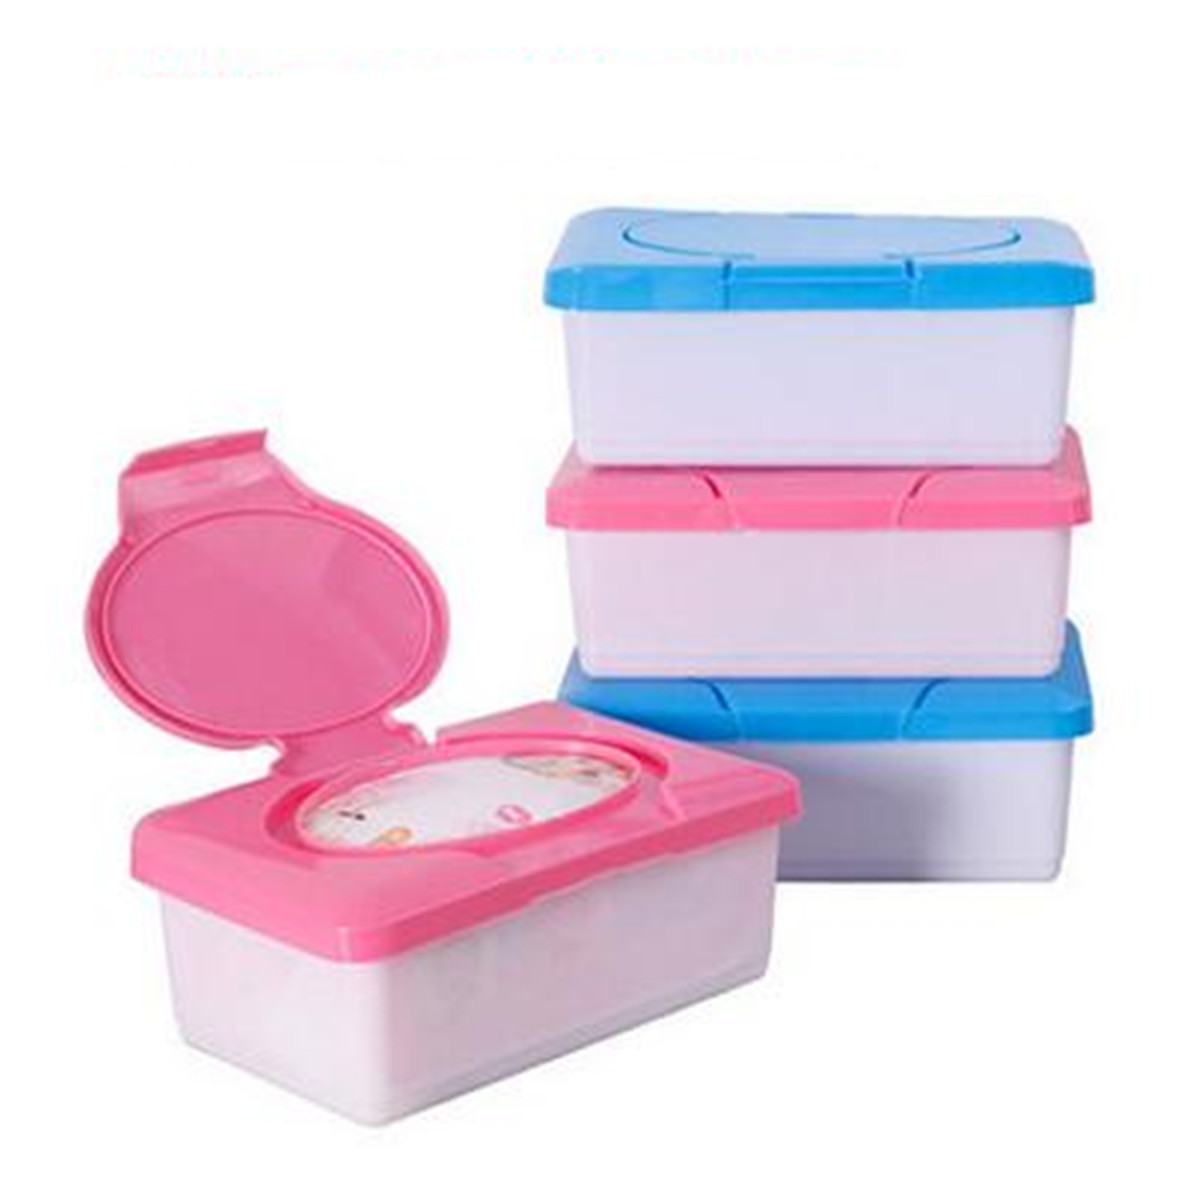 Wet-Tissue-Box-Plastic-Case-Real-Tissue-Case-Baby-Wipes-Press-Pop-up-Design-Home-Tissue-Holder-Acces-1158509